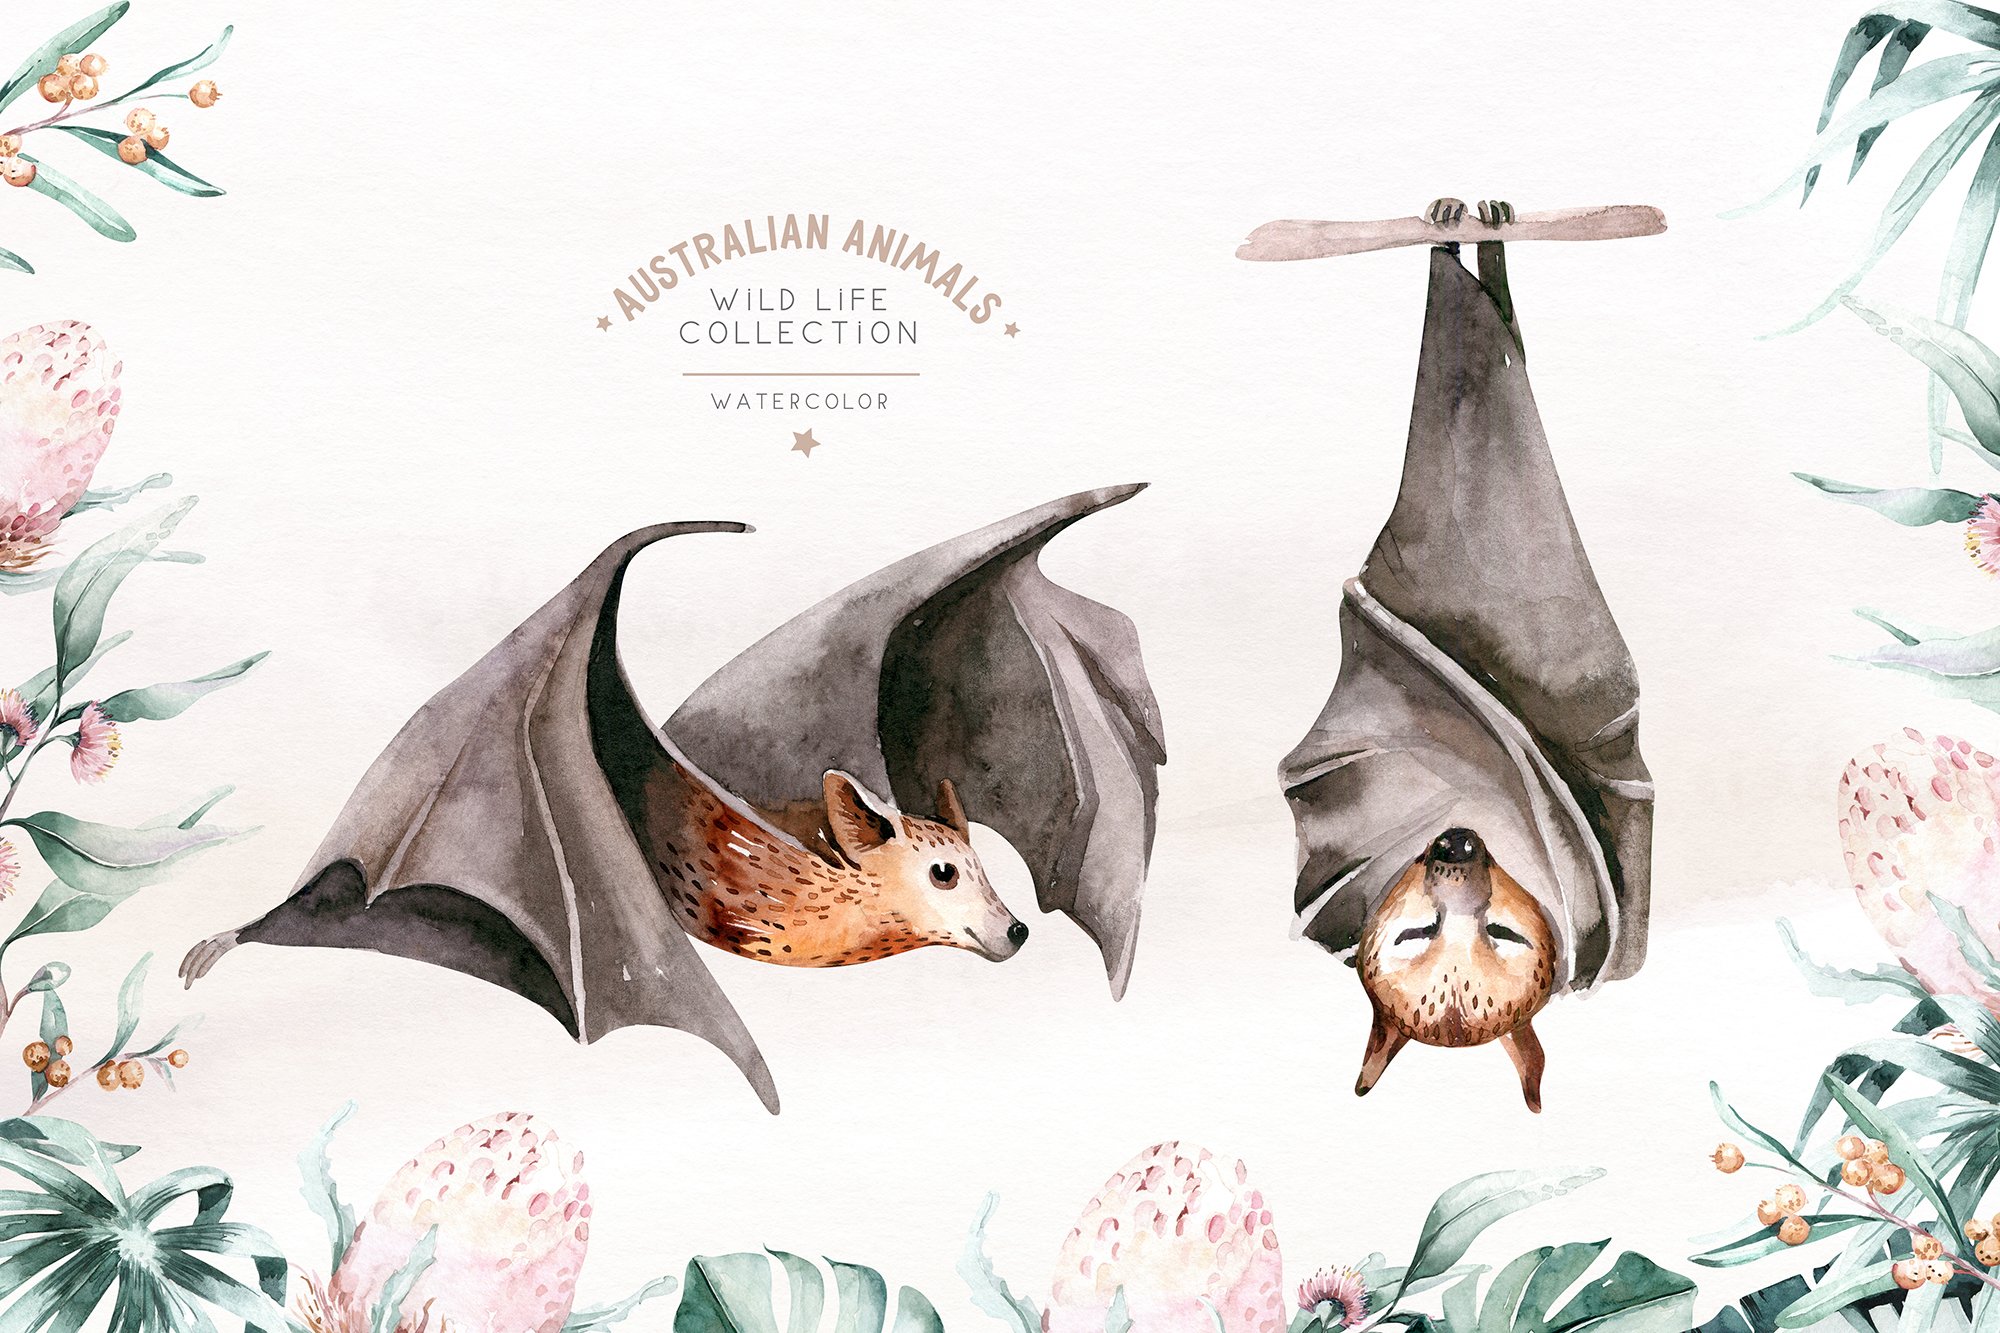 Cool bat for your Australian illustration.